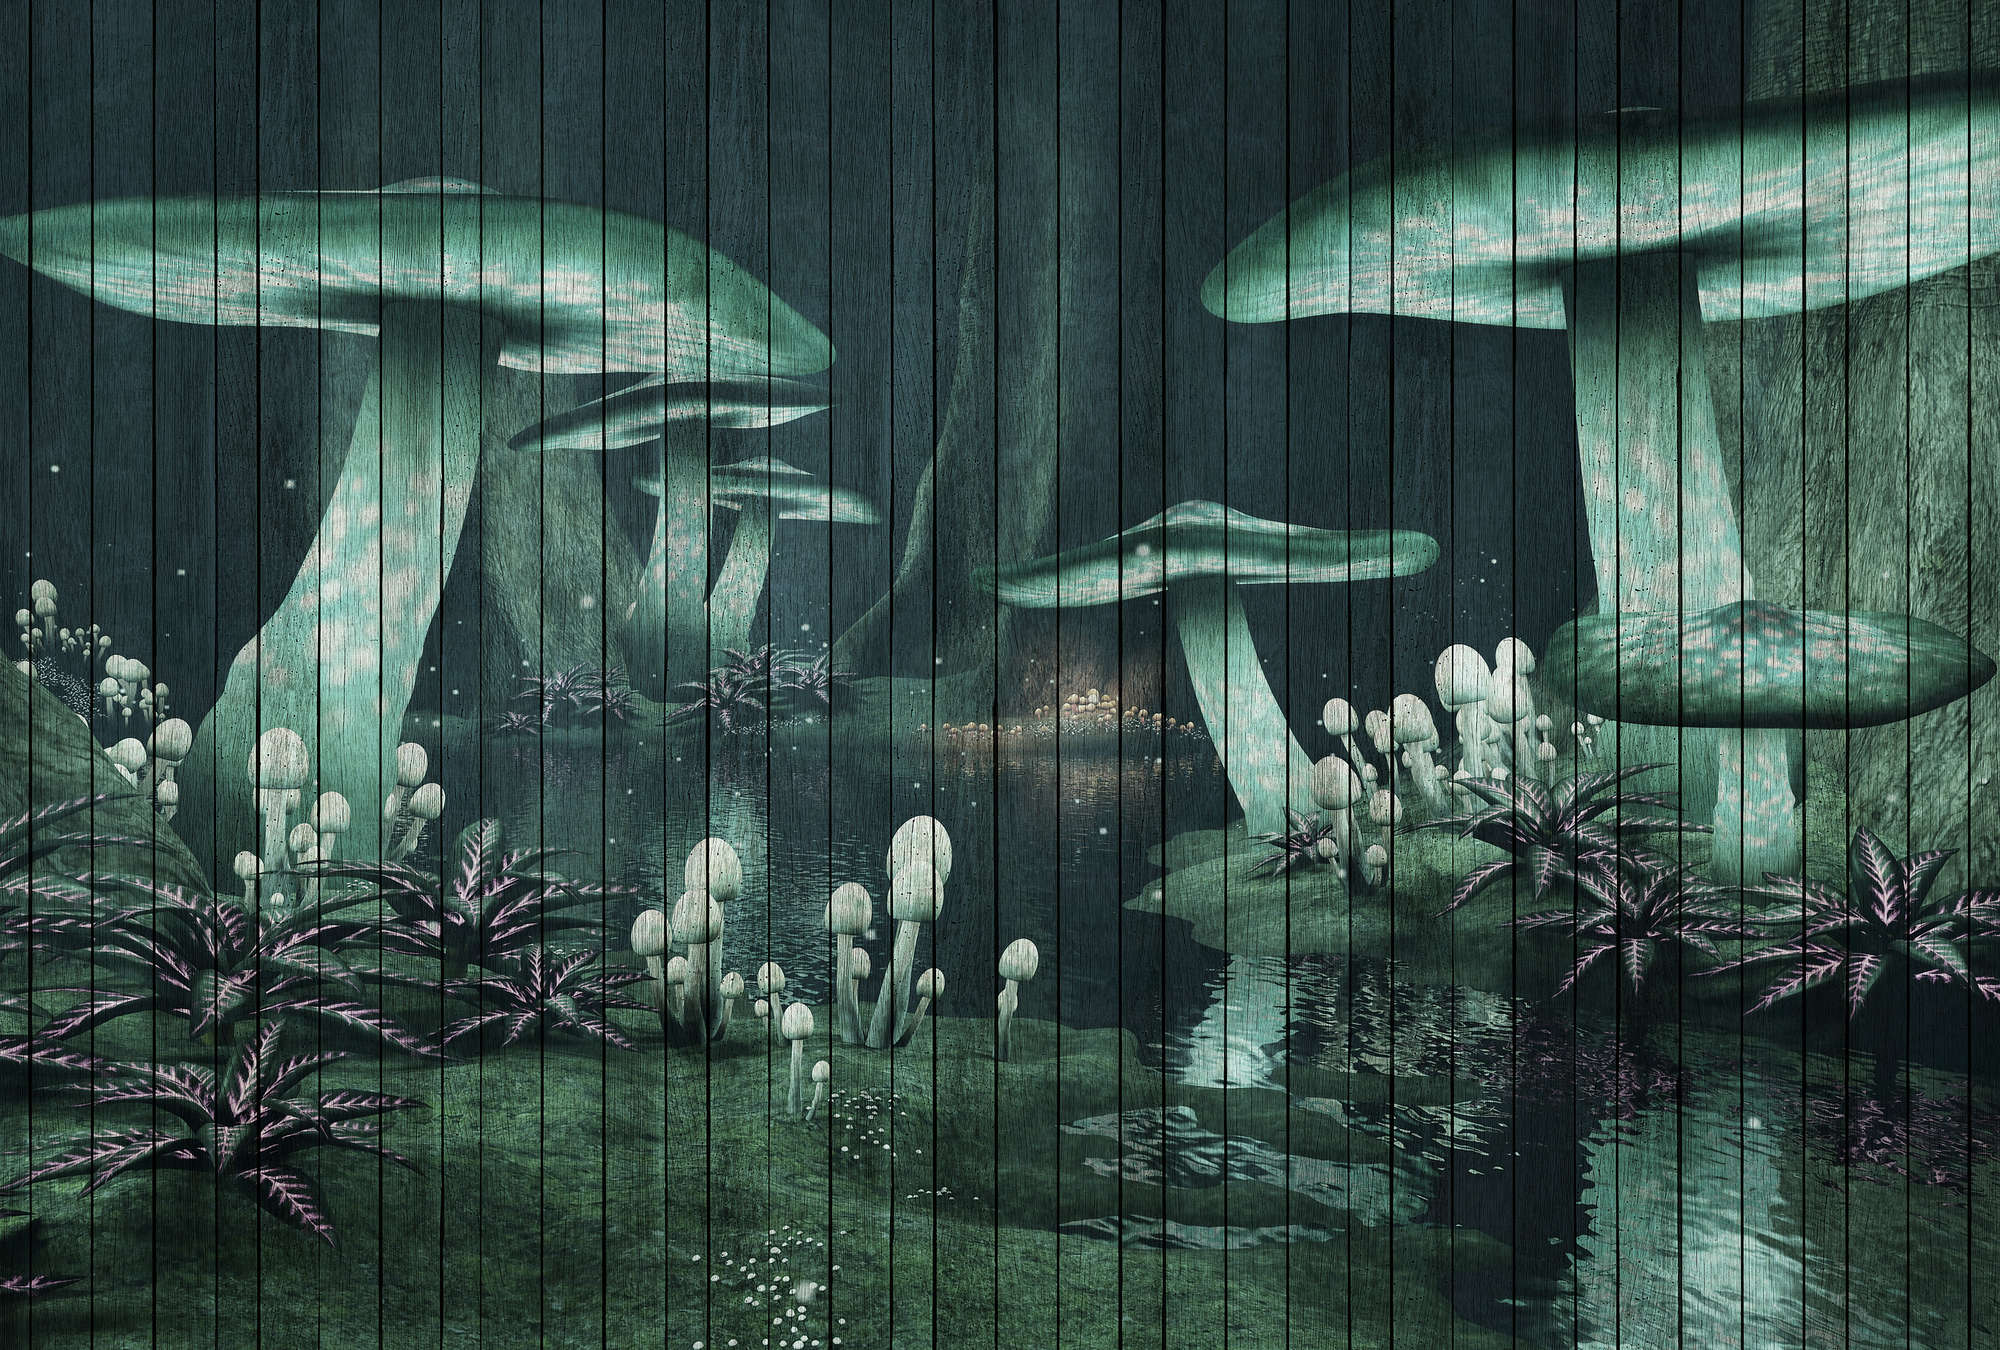             Fantasía 1 - Fotomural Bosque encantado con aspecto de madera - Verde | Vellón liso de primera calidad
        